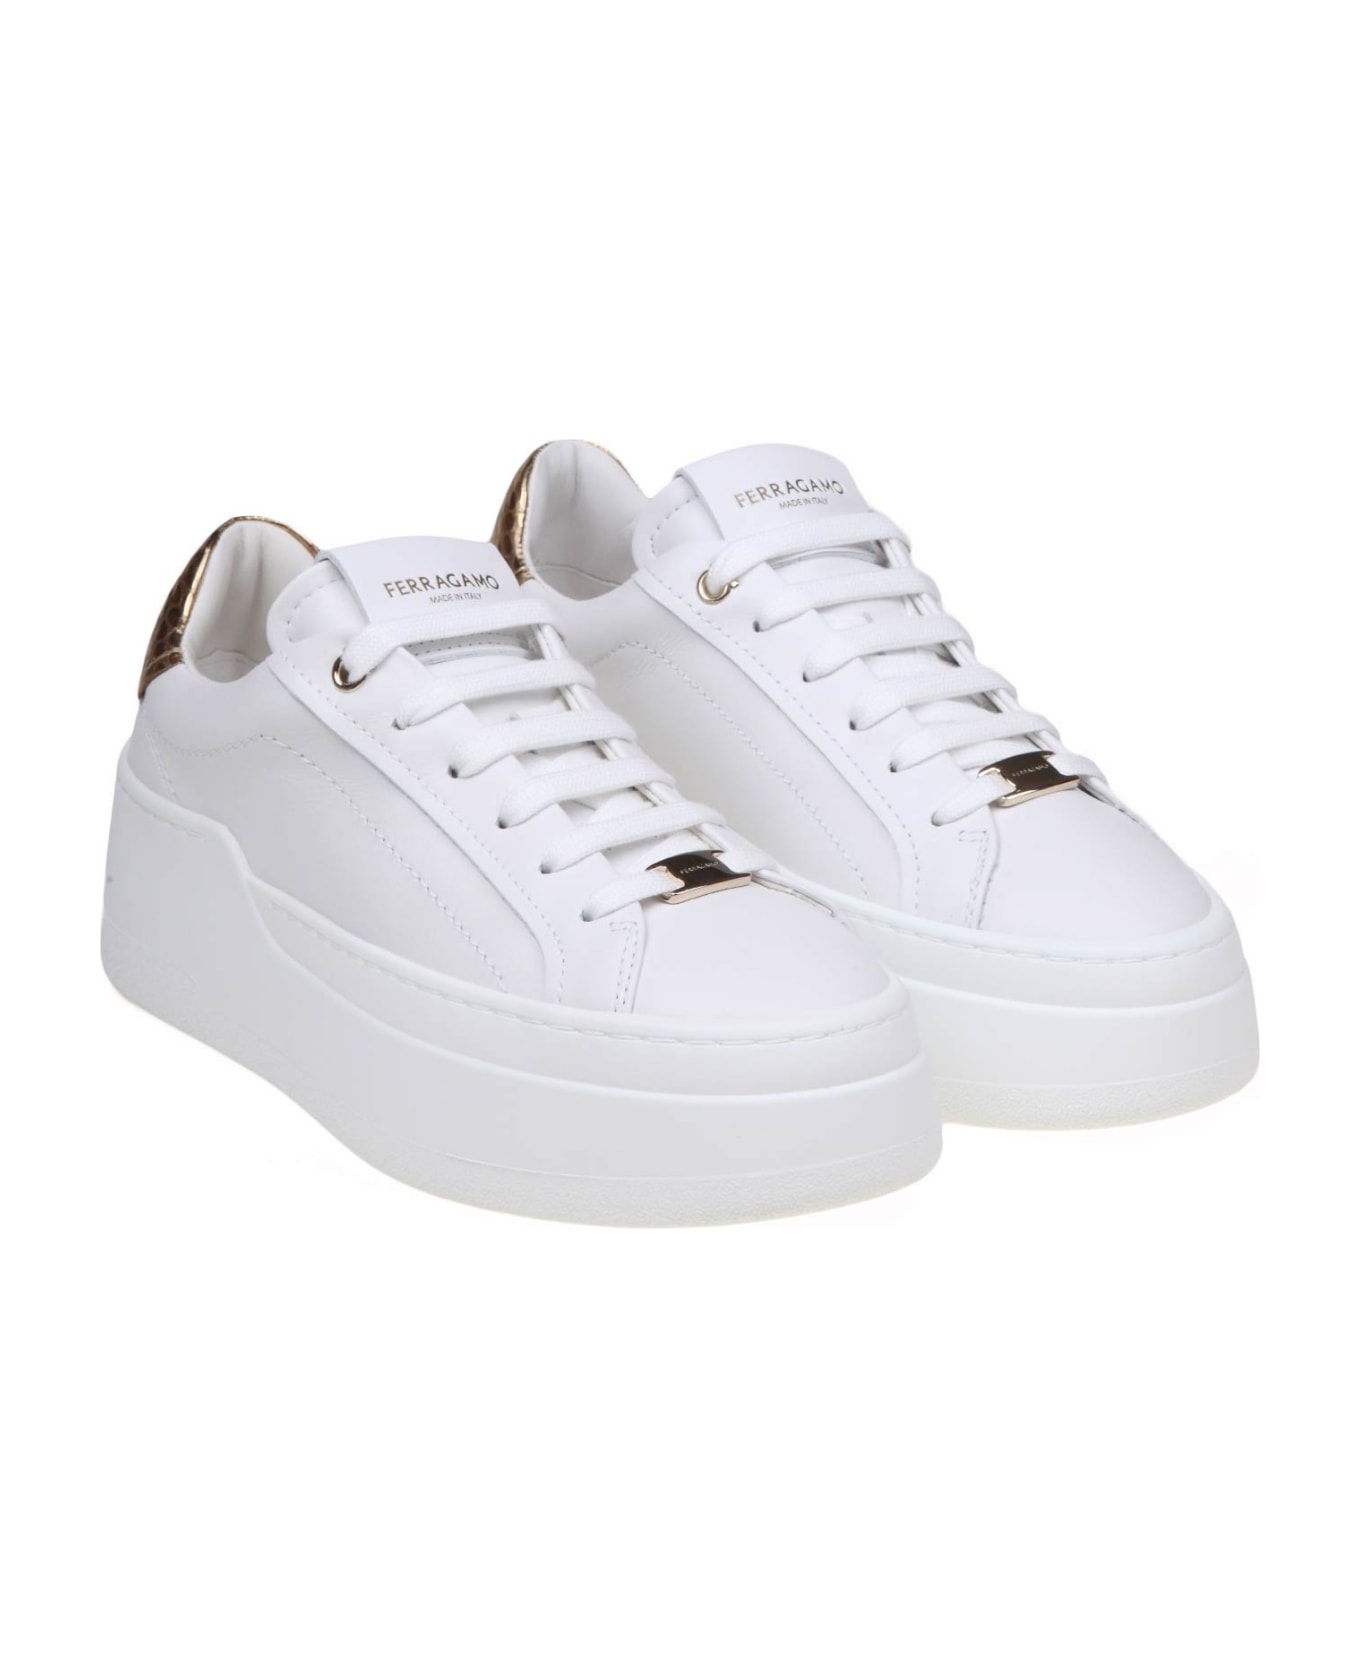 Ferragamo Dahlia Sneakers In White Leather - WHITE